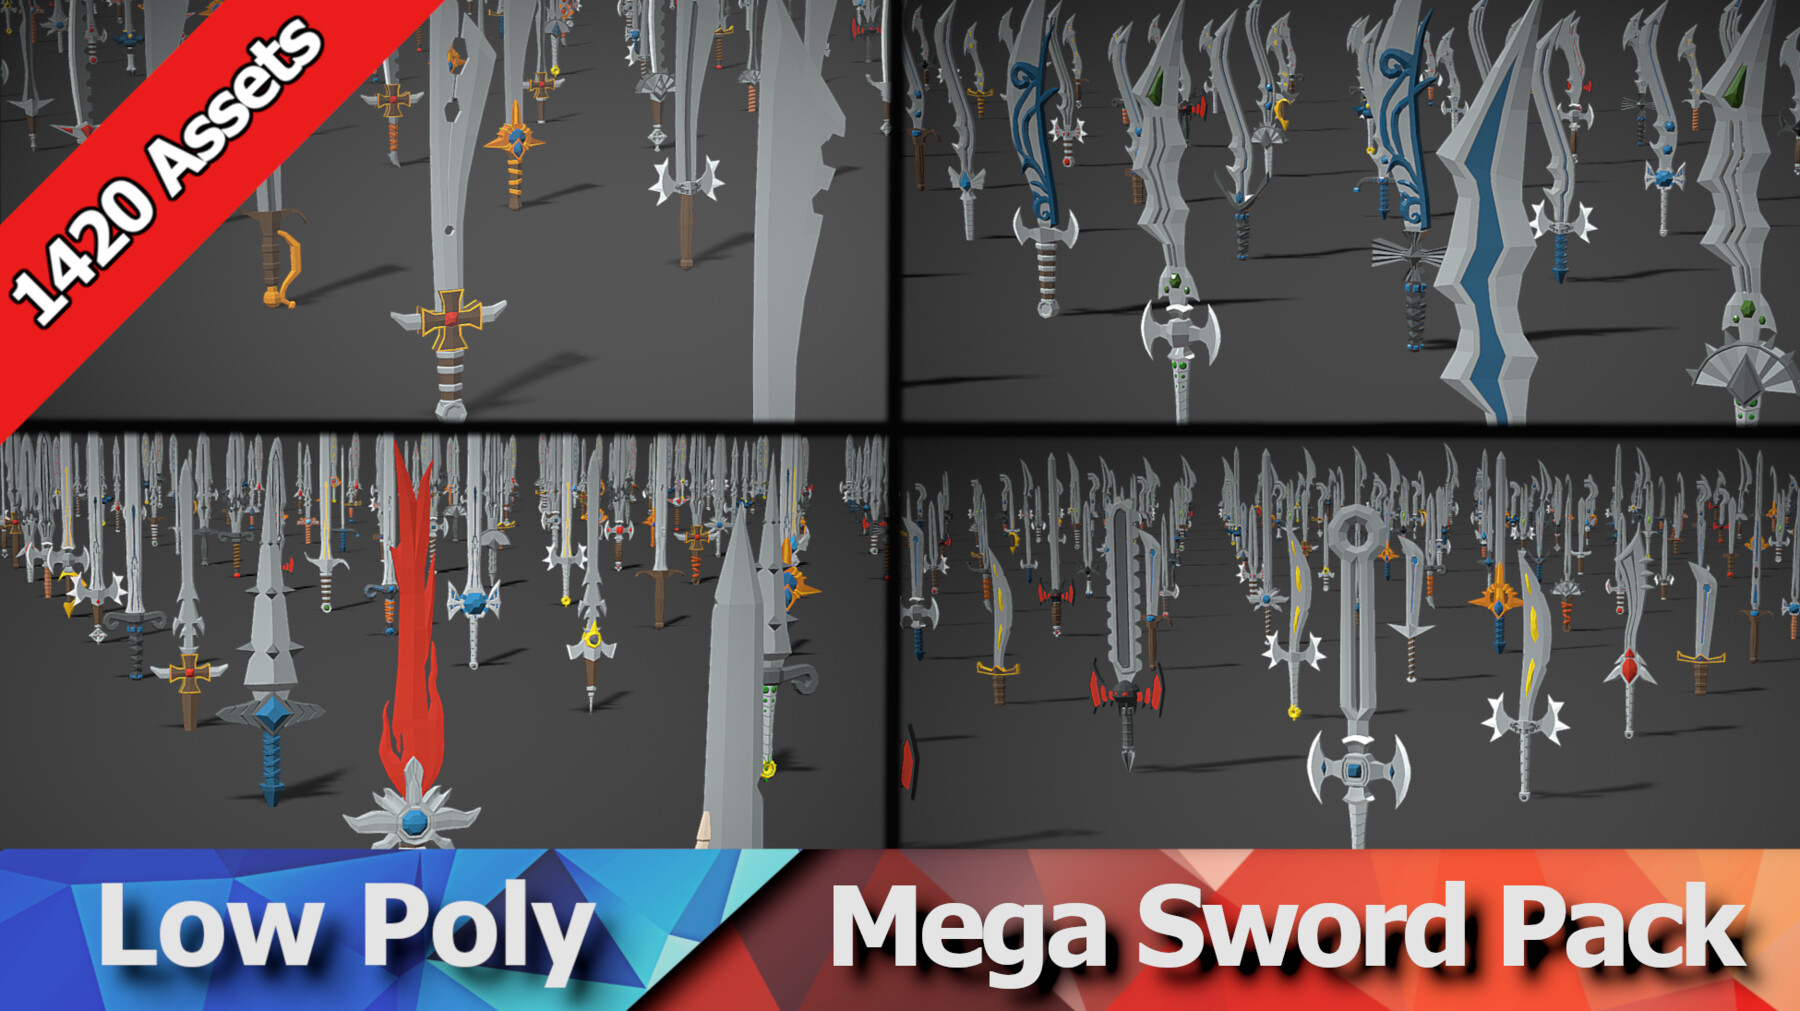 ELEMENTS Sword Pack!! - Release Announcements 